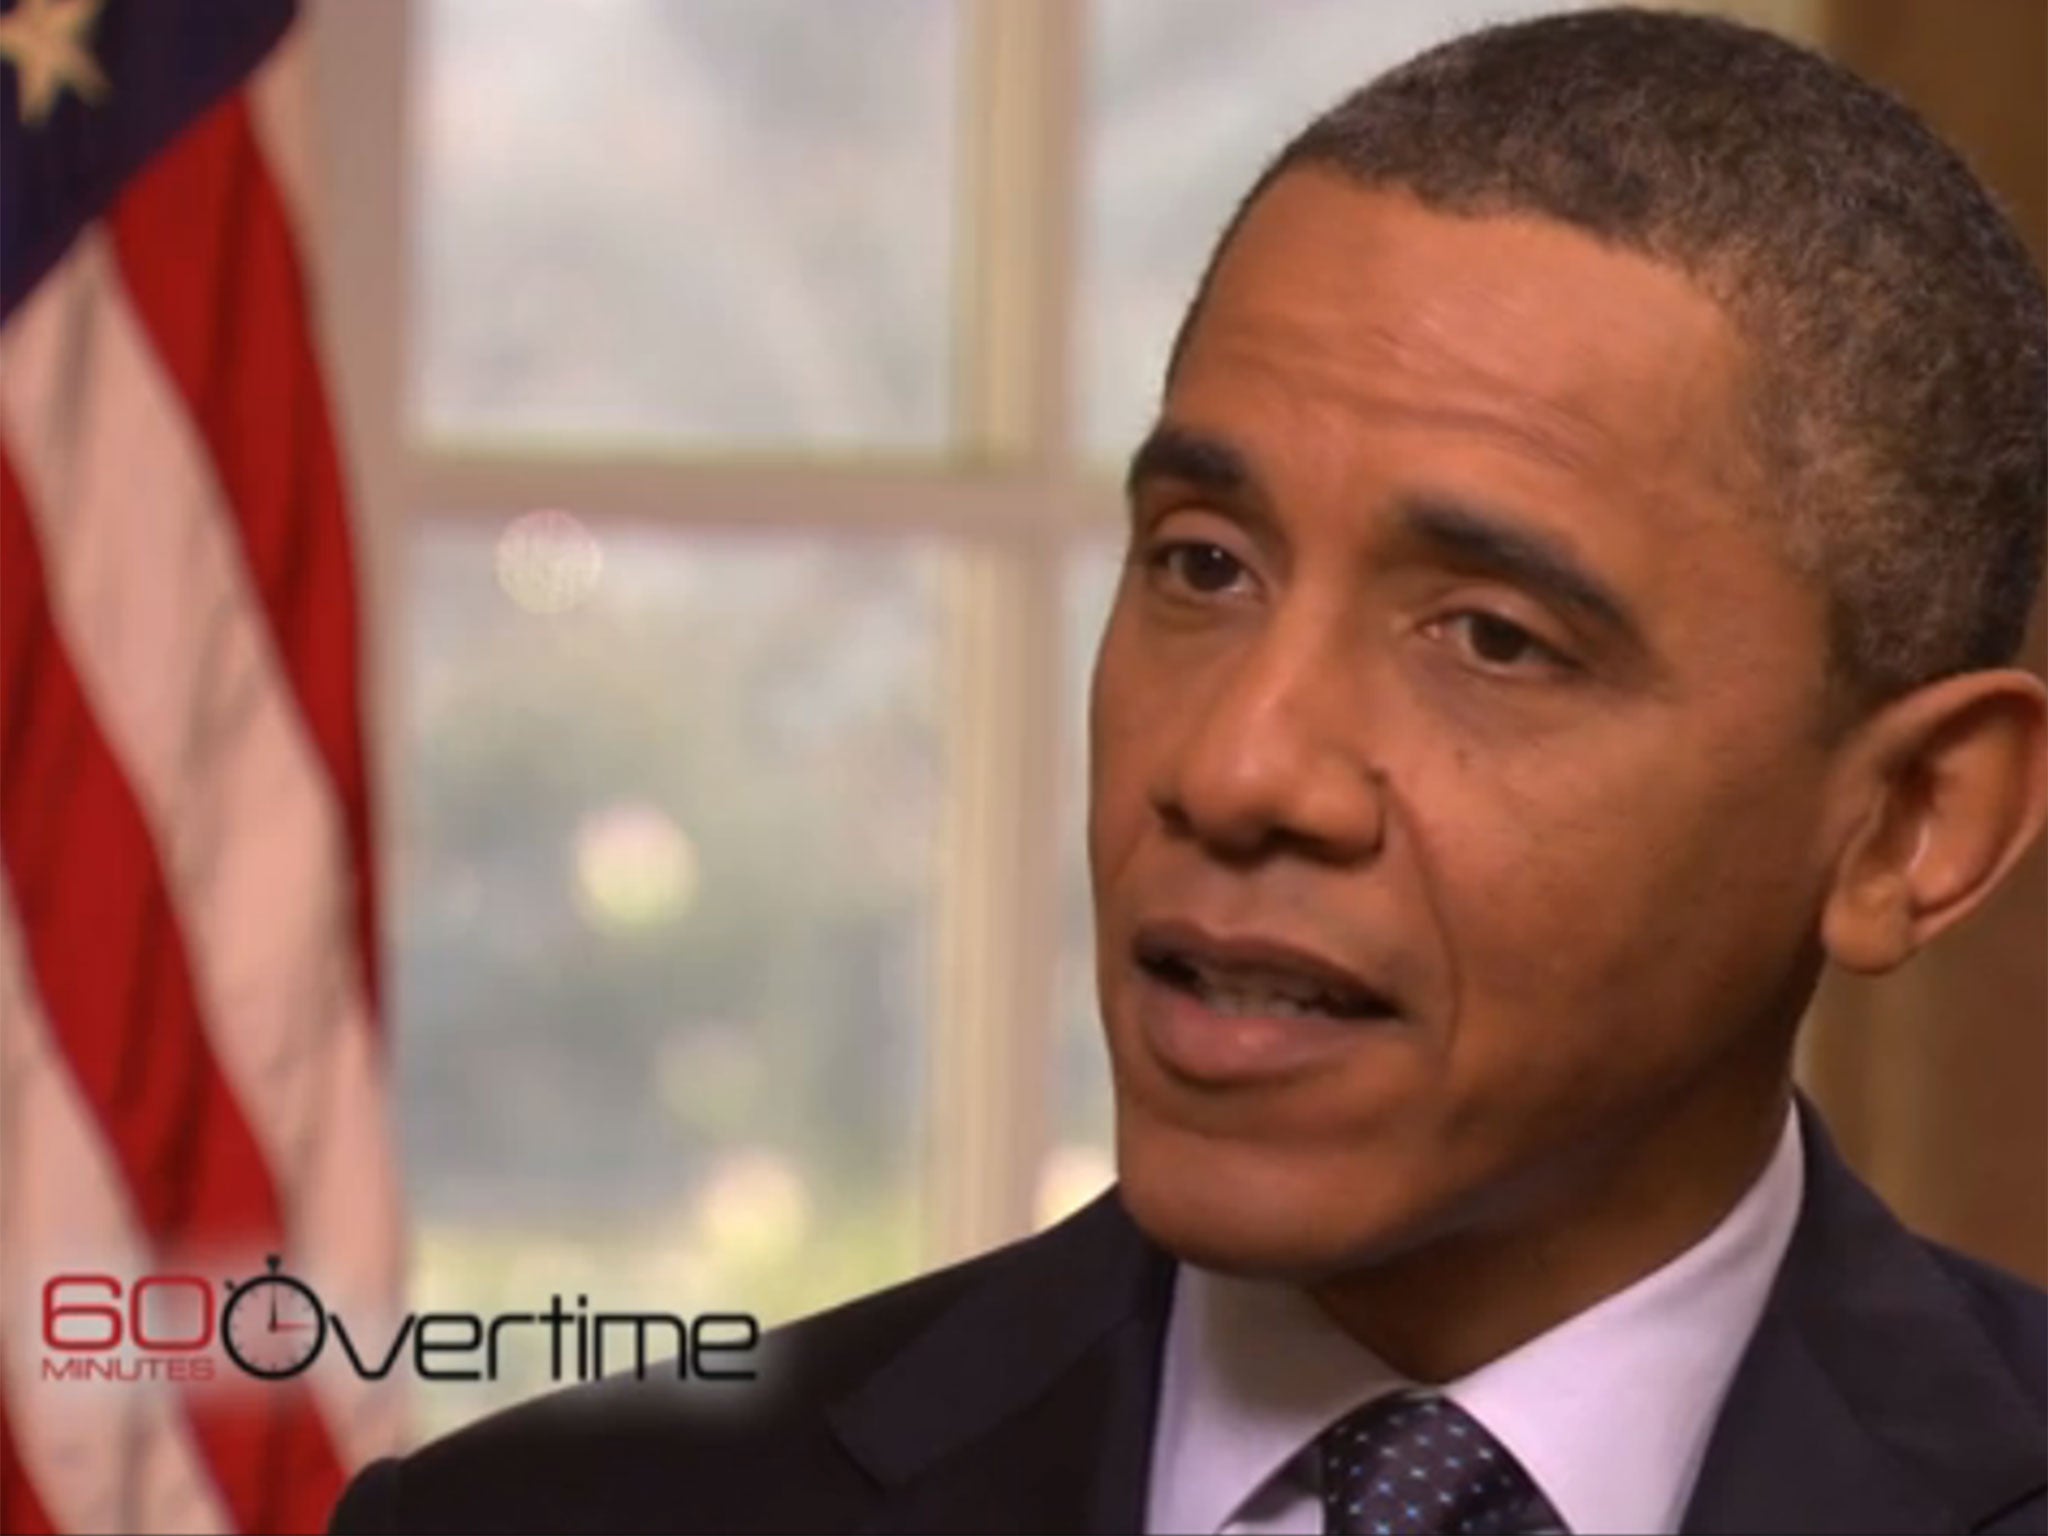 President Obama said Syria had become 'ground zero' for jihadists worldwide